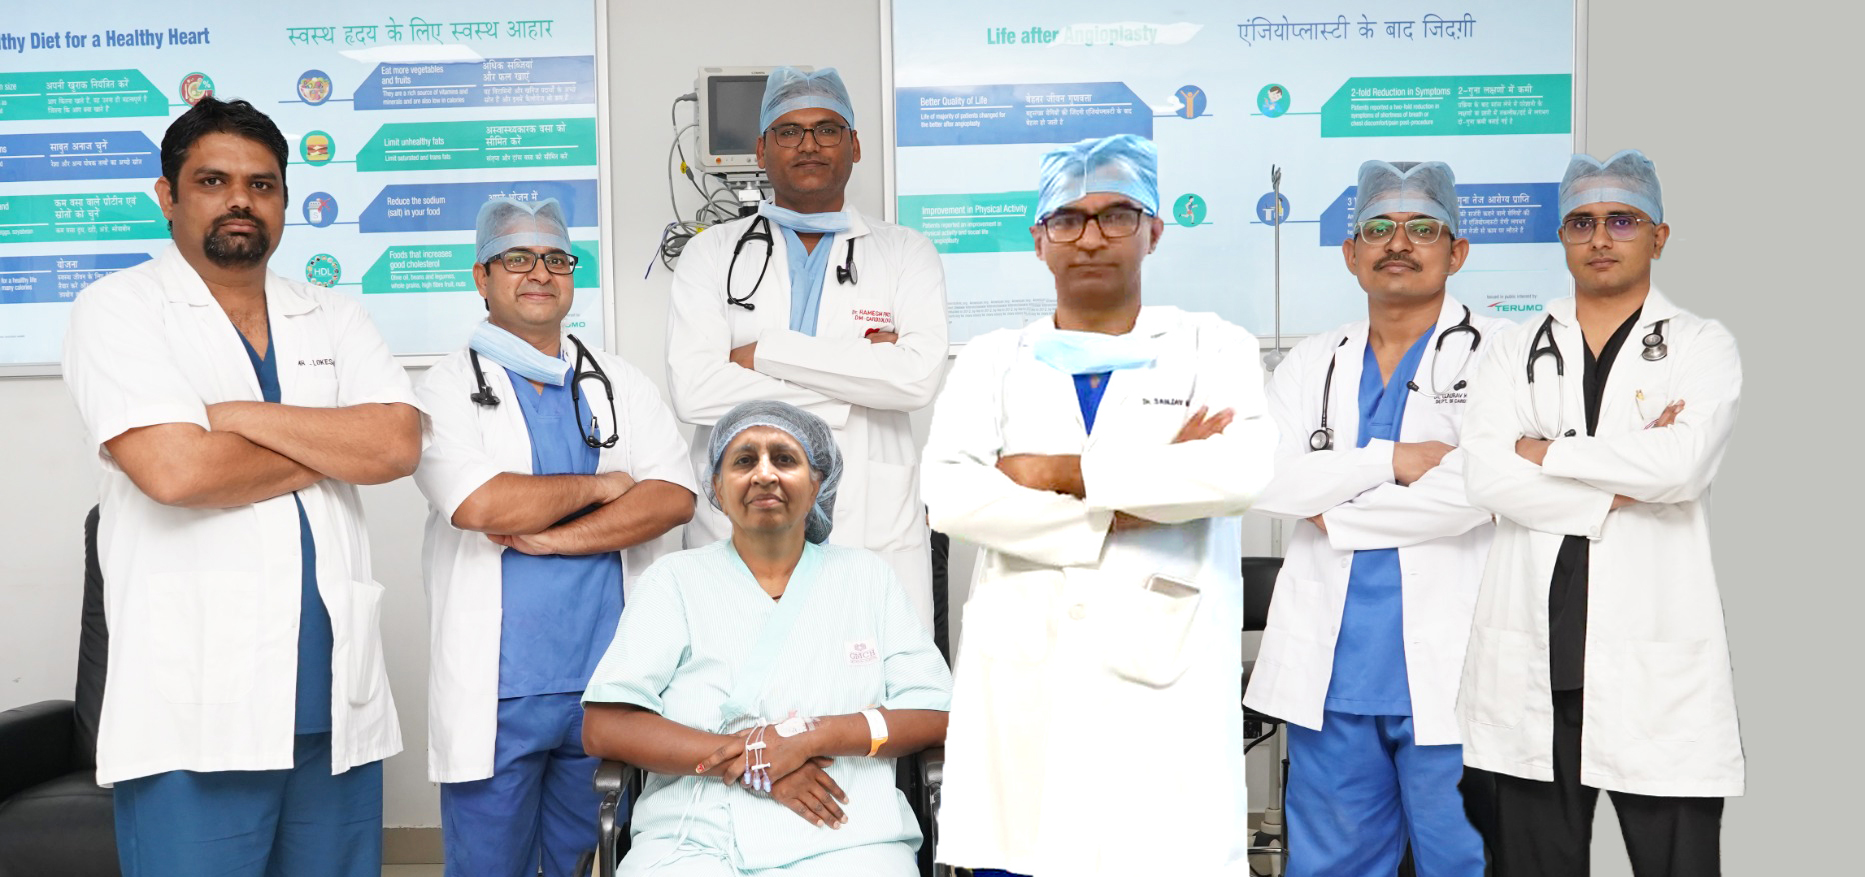 Geetanjali Hospital's Successful Treatment of High-Risk Cardiac Patient Through Innovative TMVR Procedure